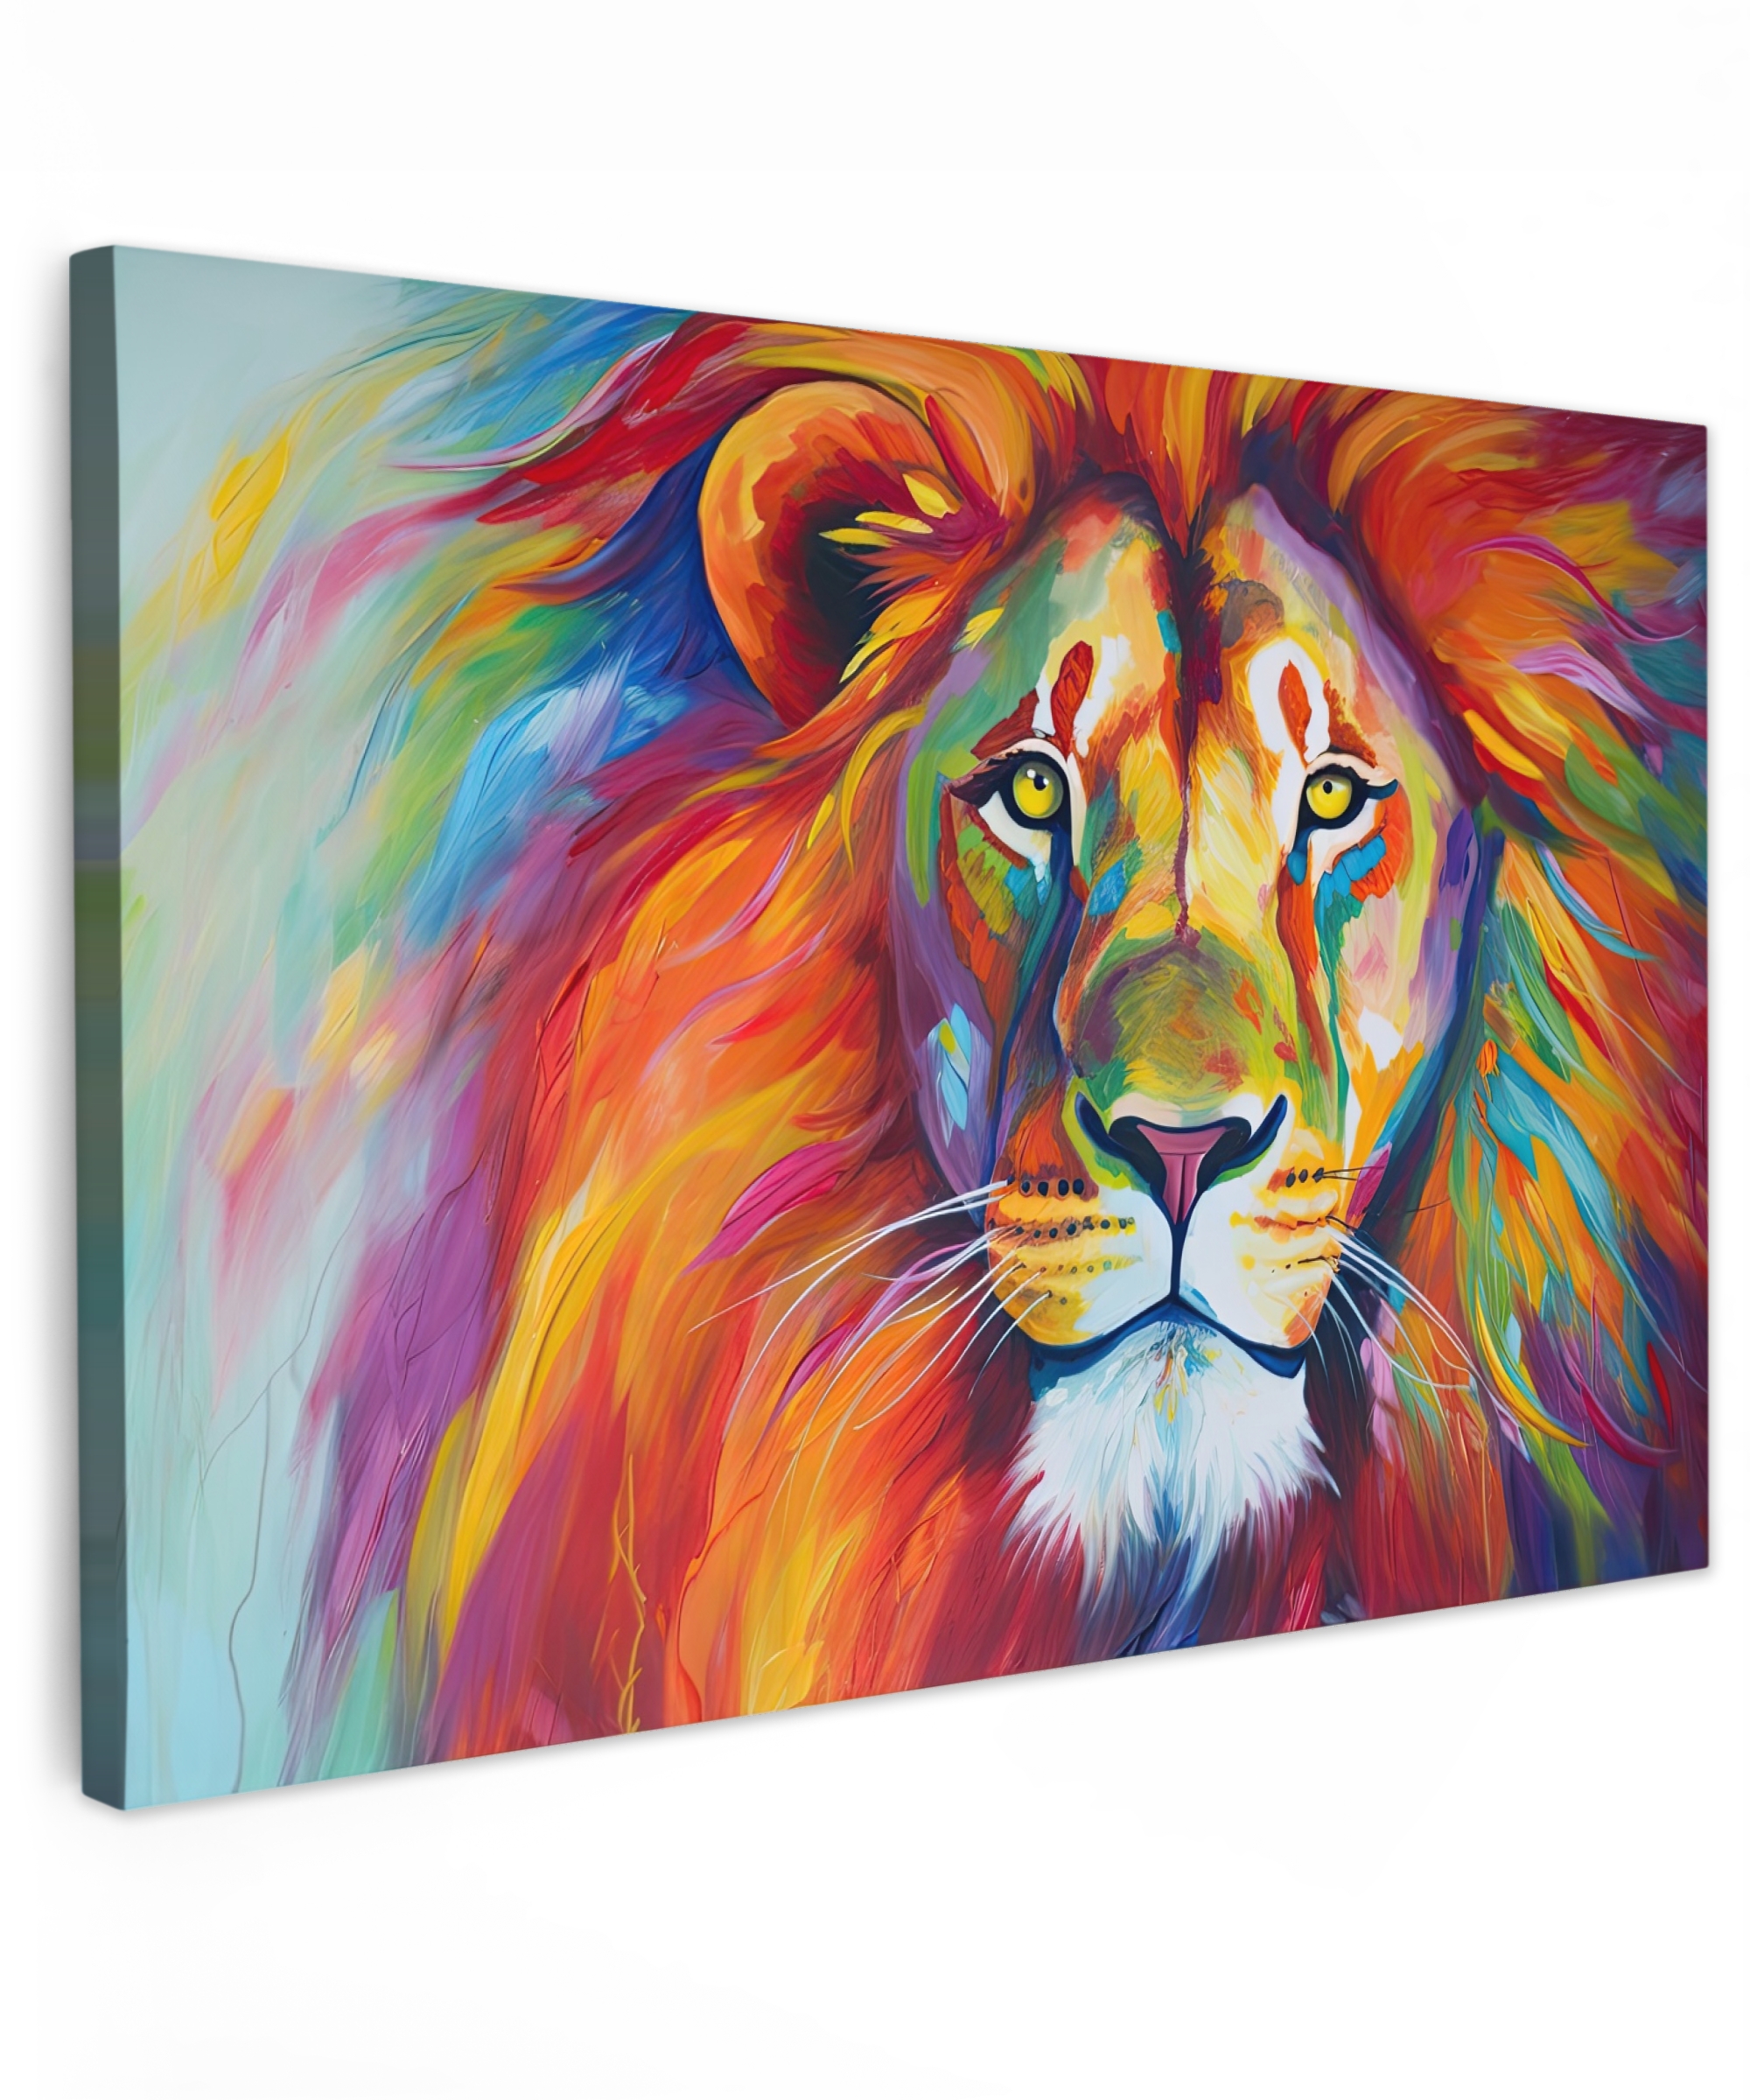 Leinwandbild - Löwe - Tiere - Ölfarbe - Regenbogen